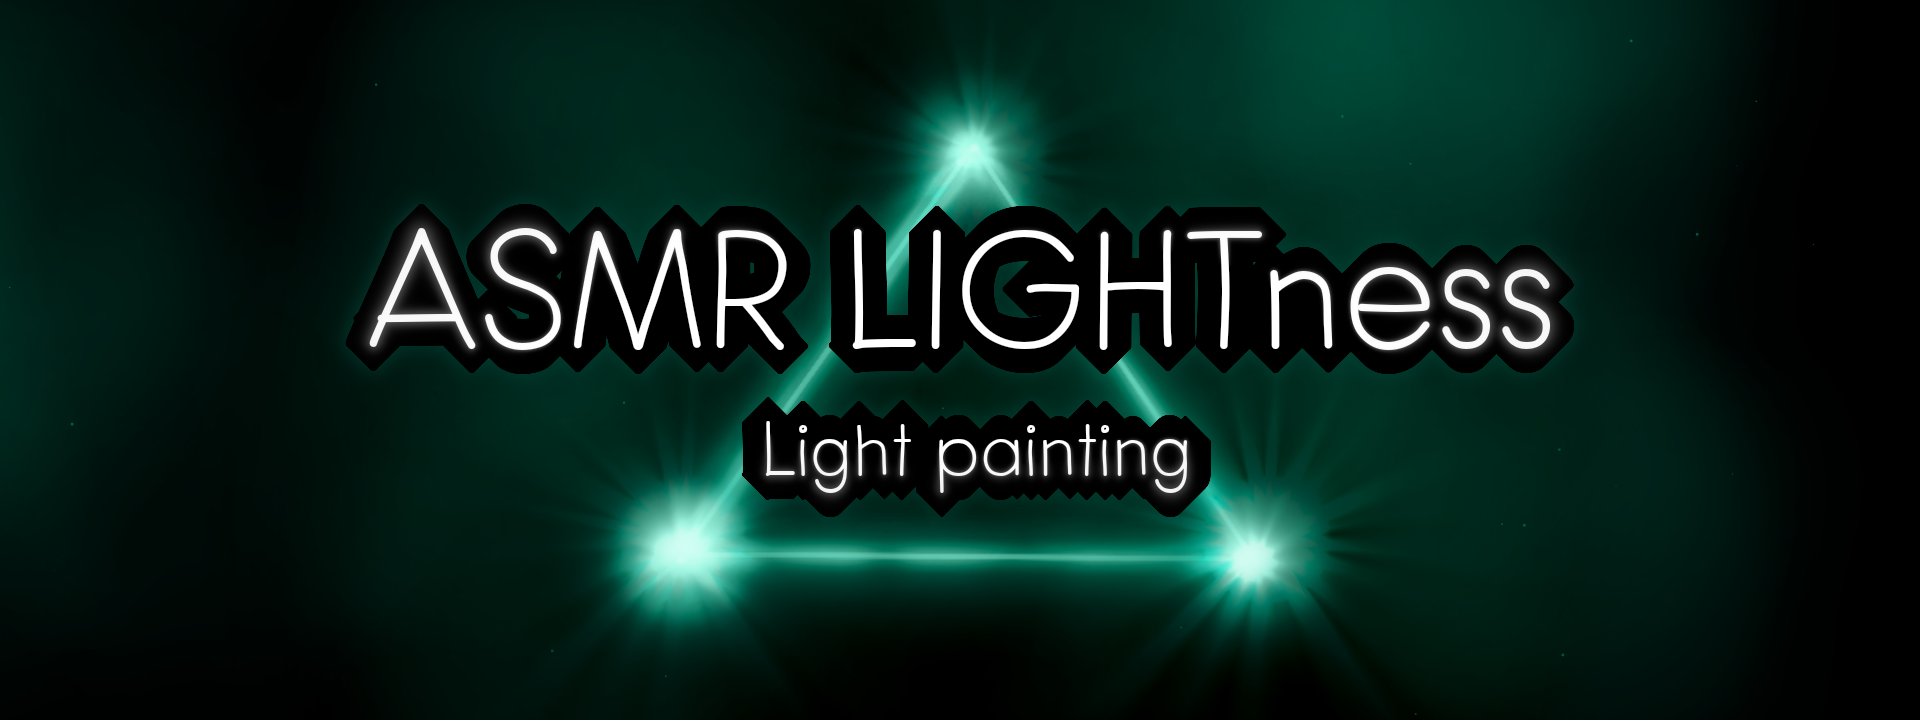 ASMR LIGHTness - Light painting